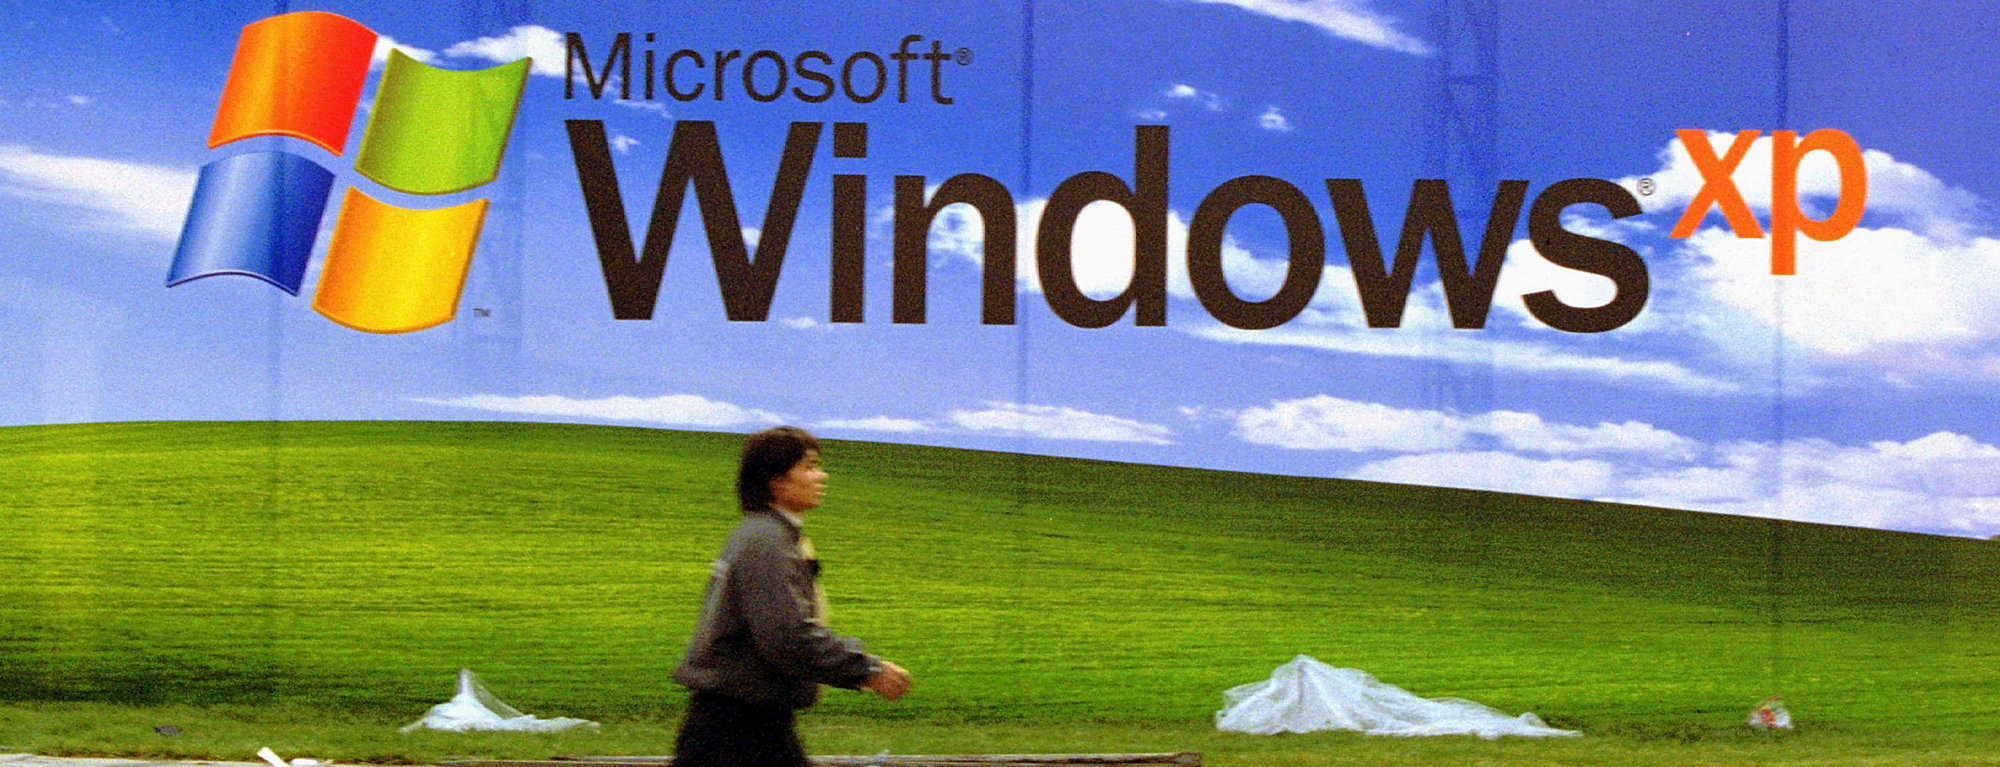 default windows xp wallpaper